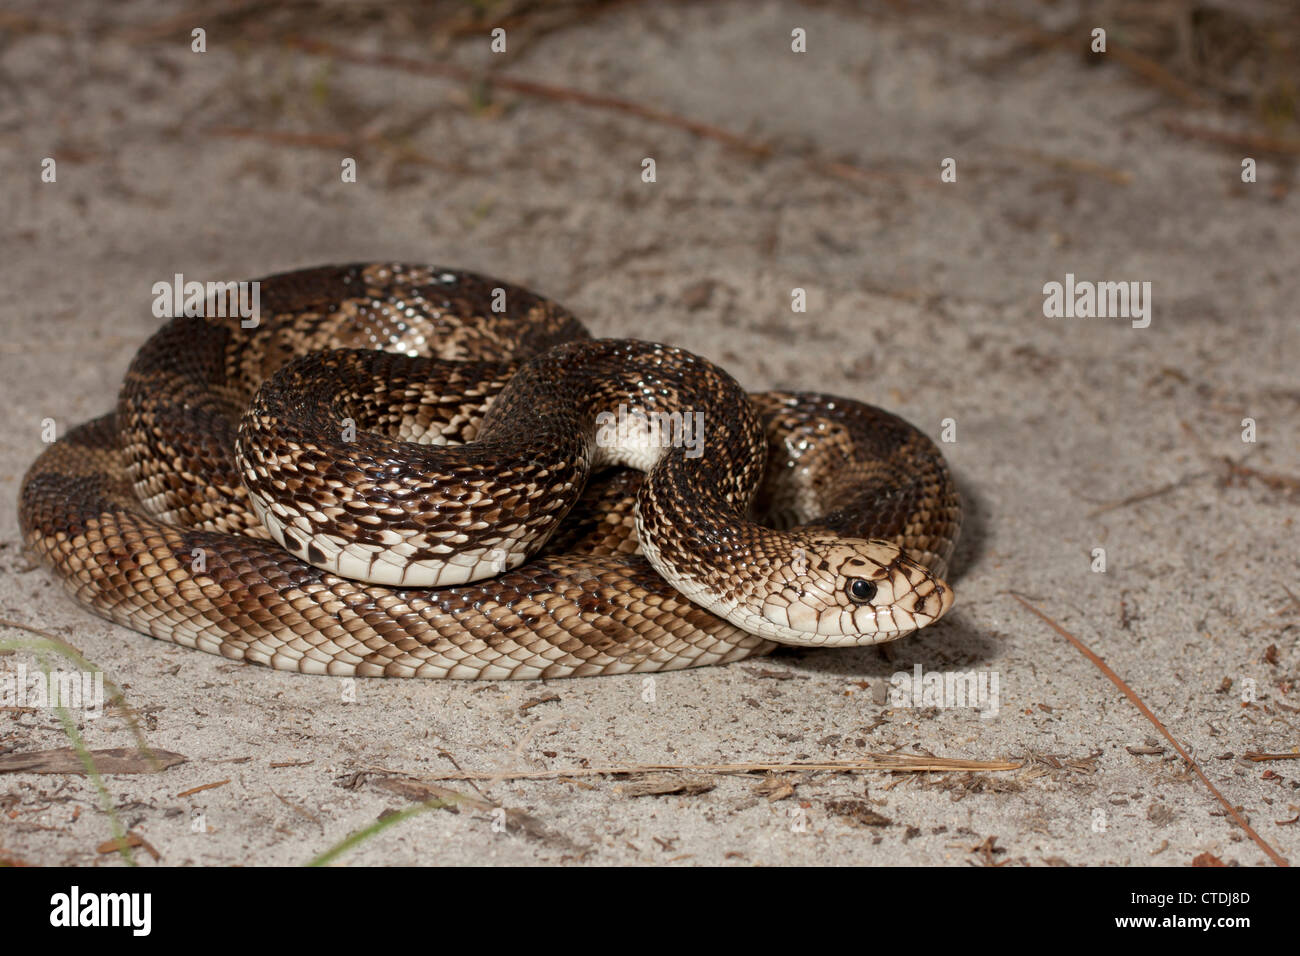 Florida pine snake Stock Photo